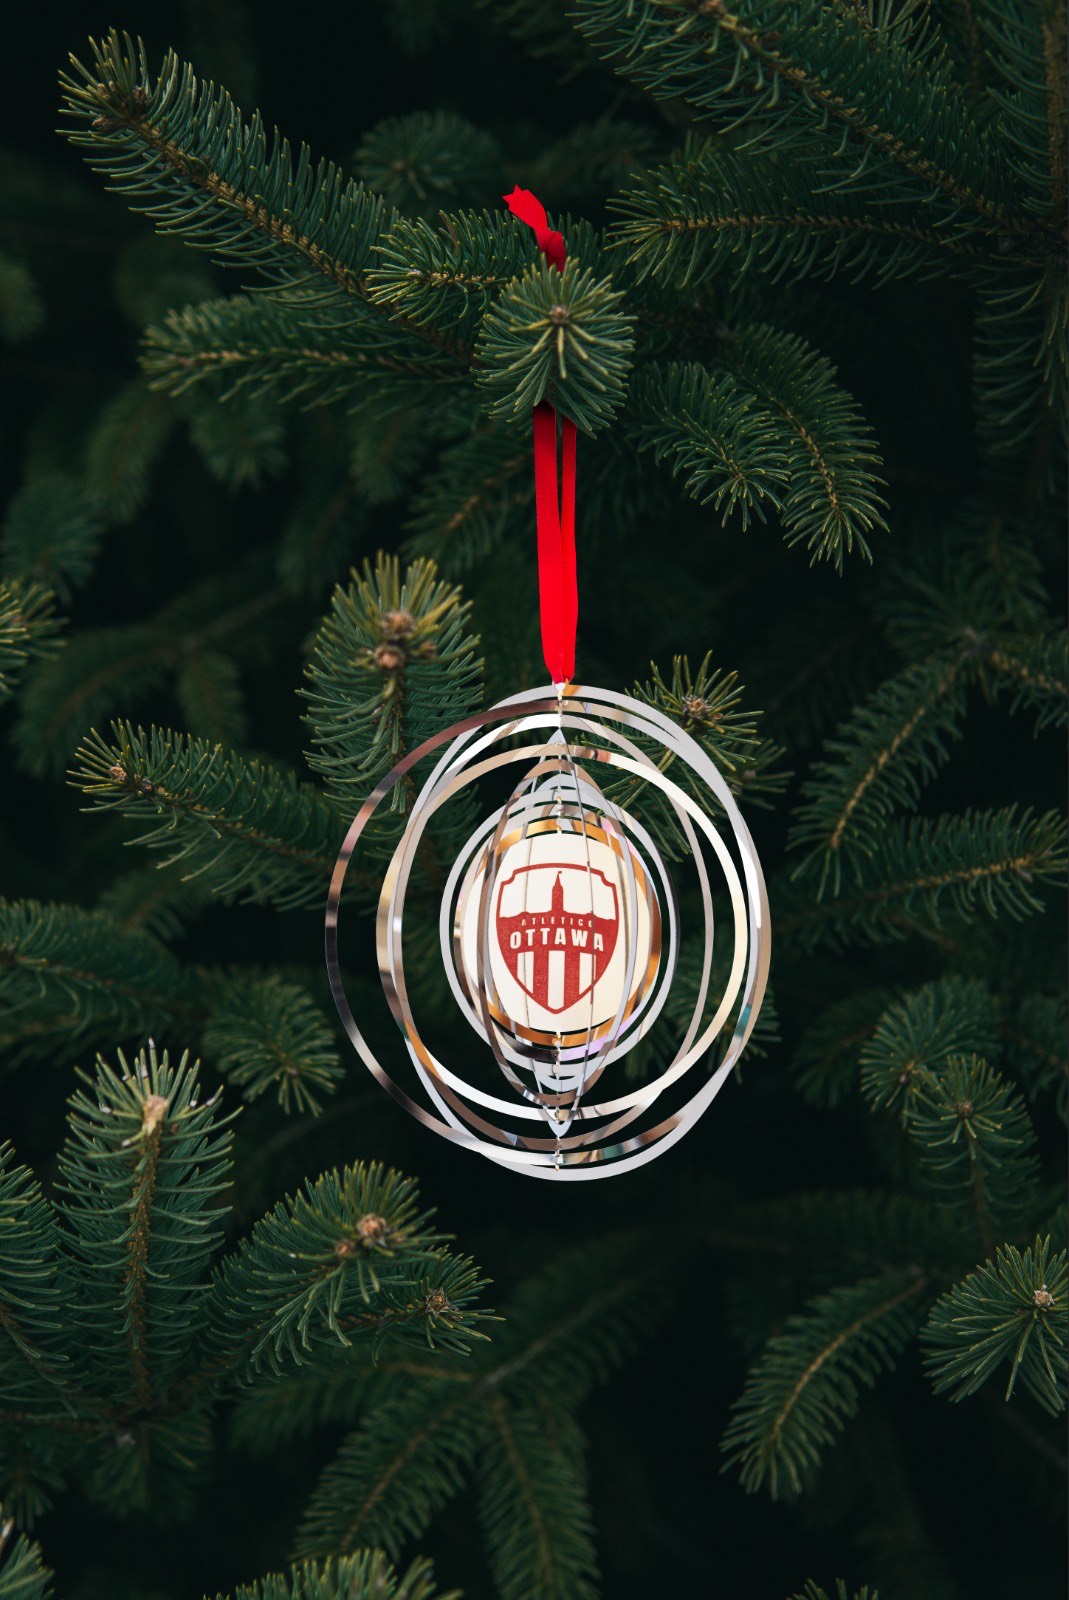 Atlético Ottawa Christmas Ornament